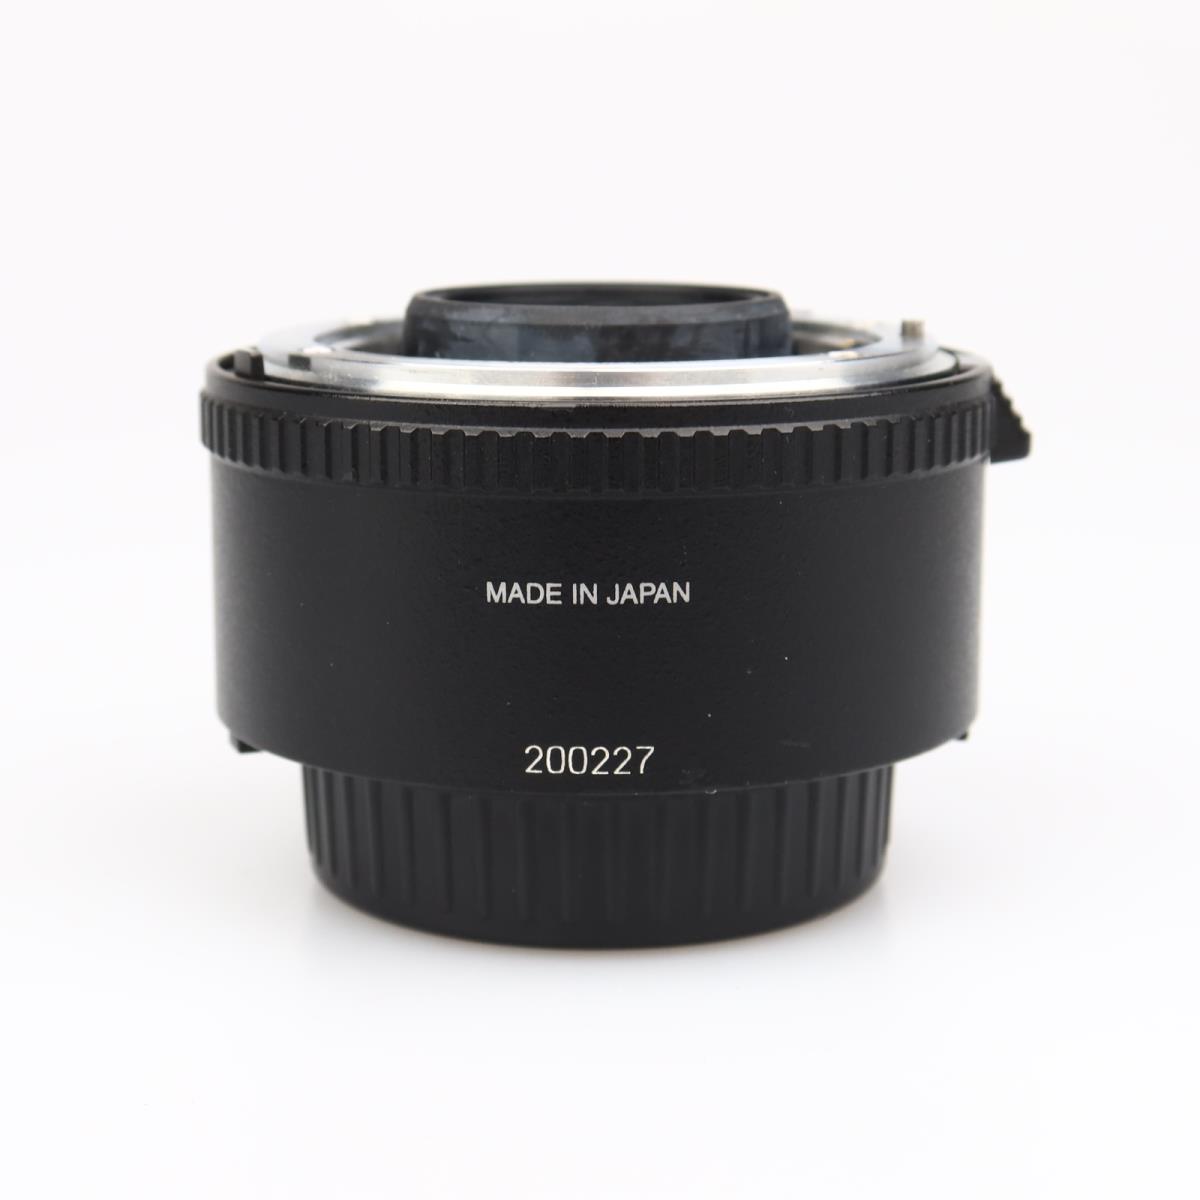 (Myyty) Nikon AF-S Teleconverter TC-17E II (käytetty)